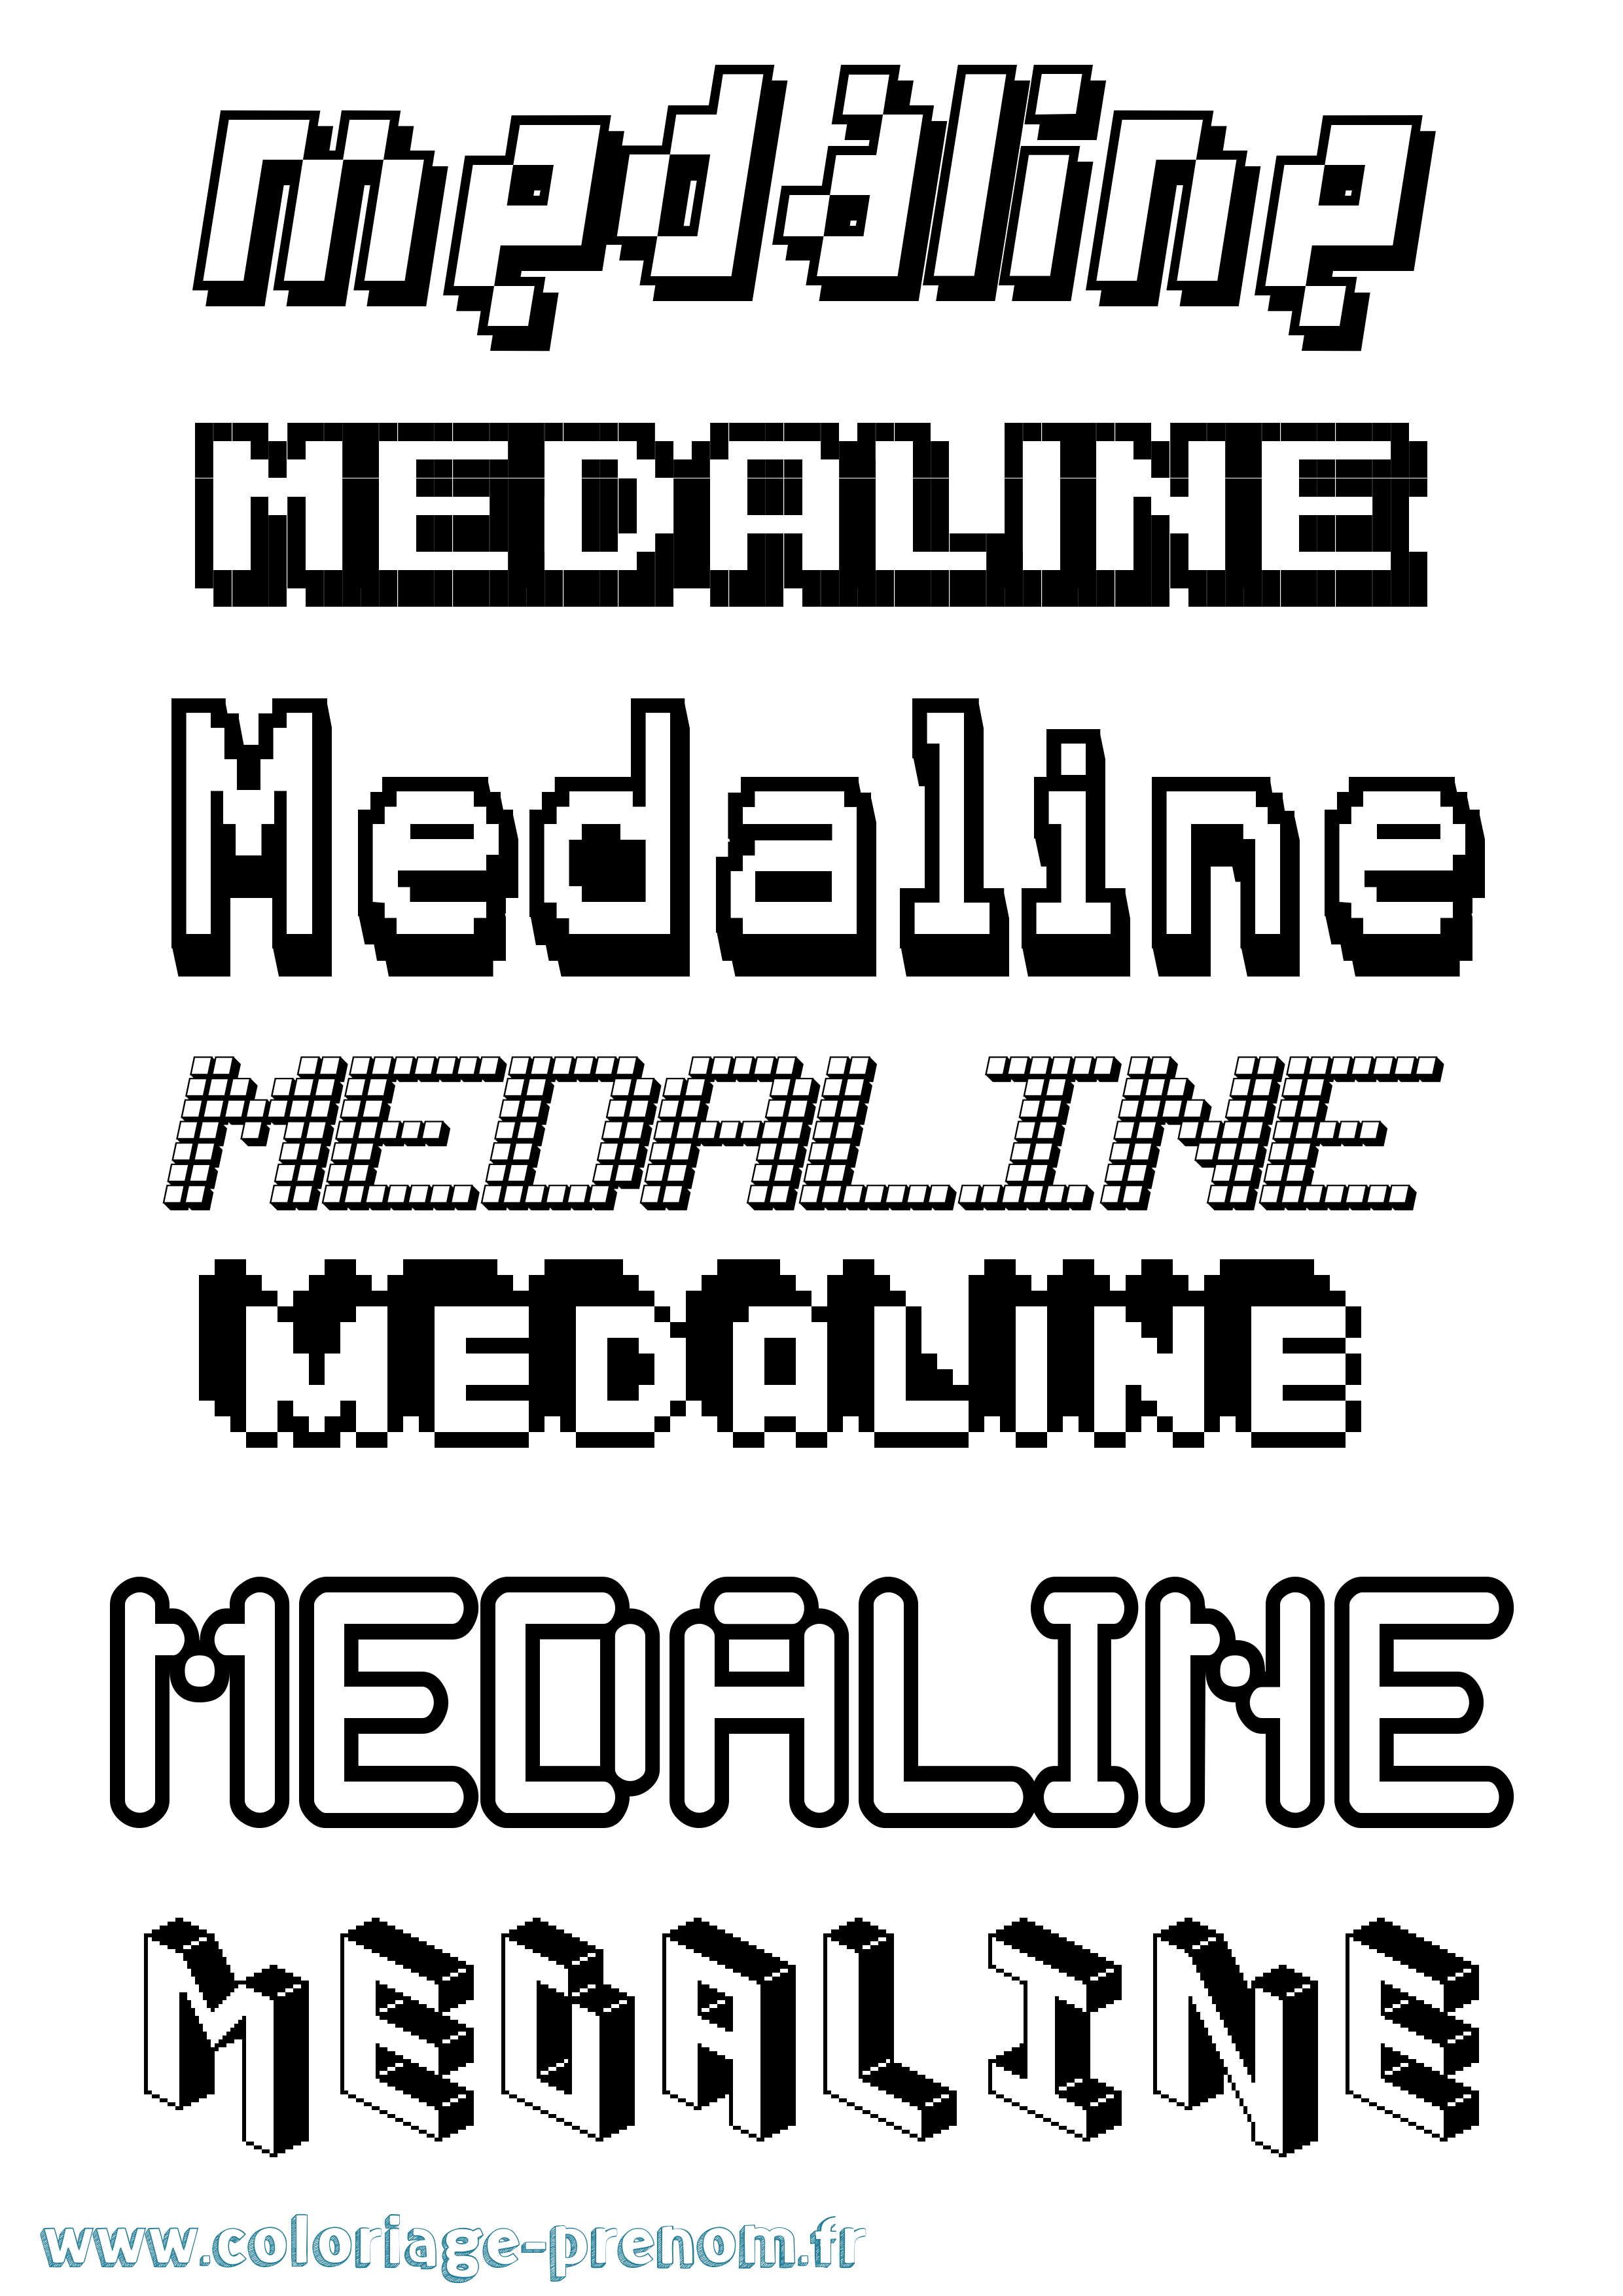 Coloriage prénom Medaline Pixel